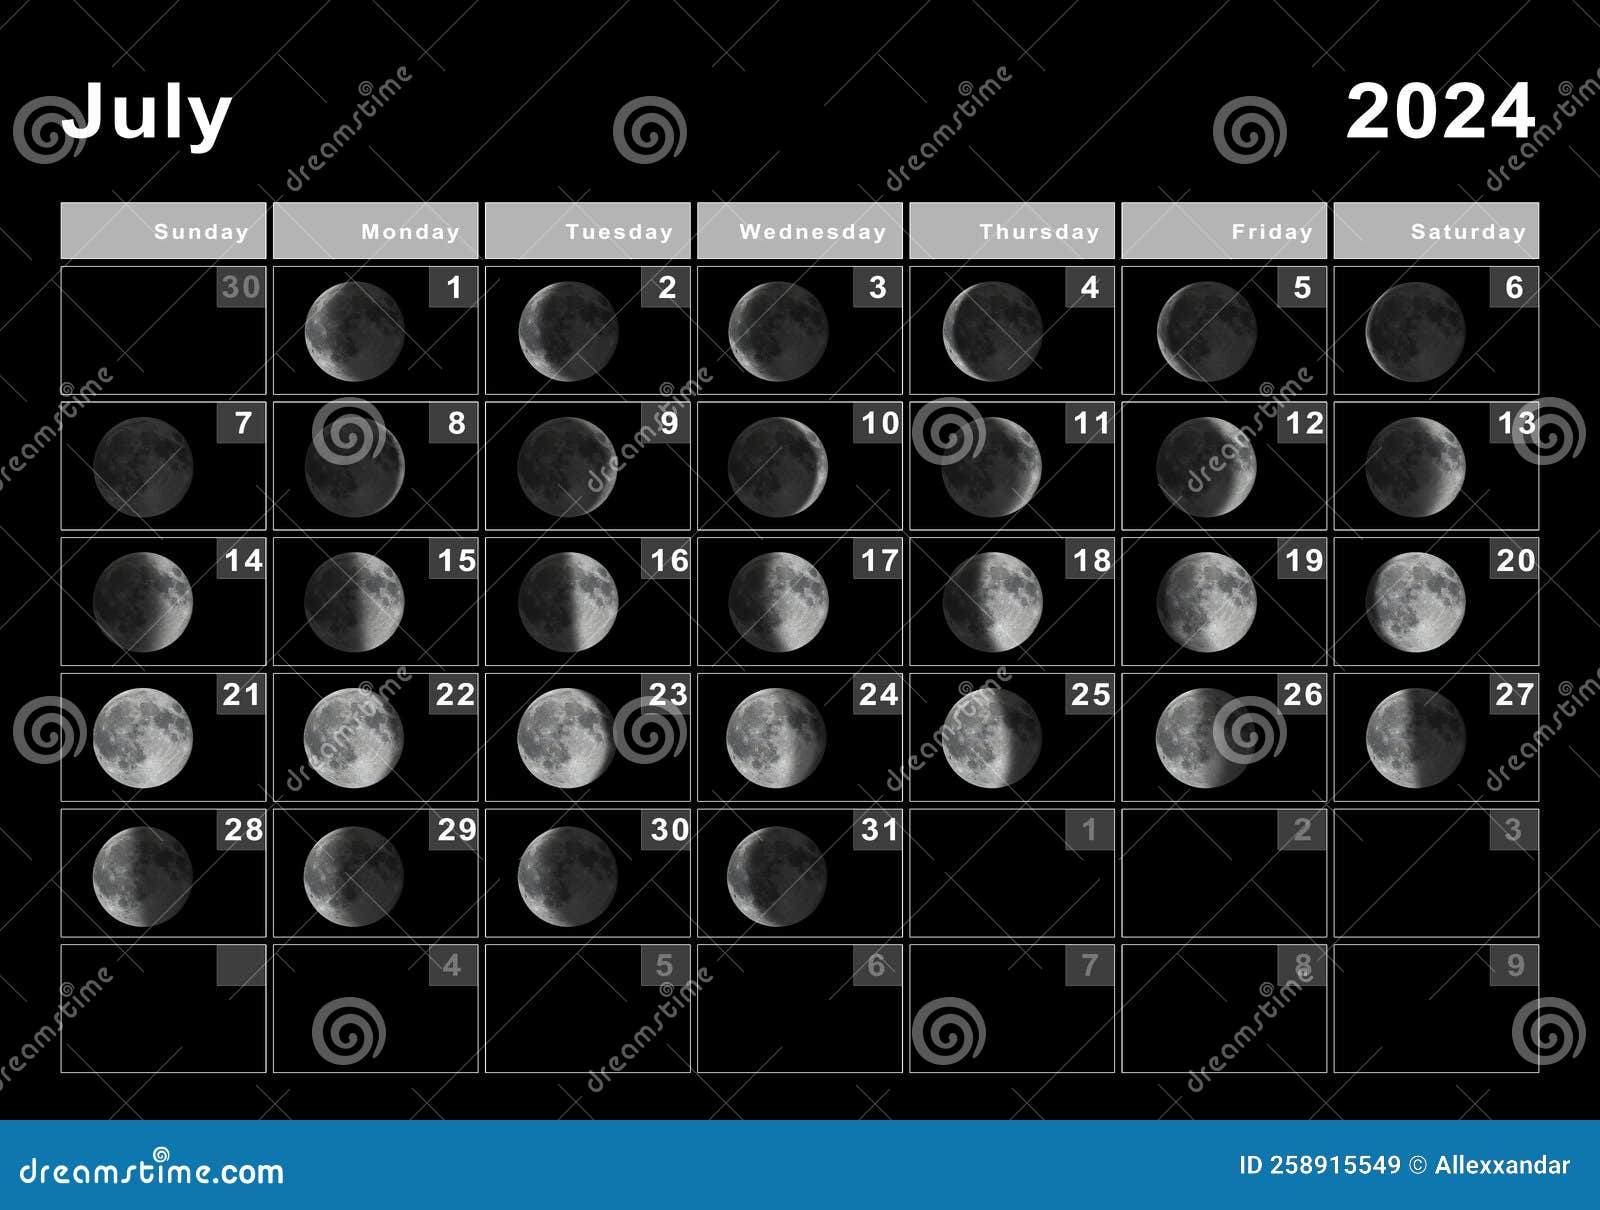 July 2024 Lunar Calendar, Moon Cycles Stock Illustration Illustration